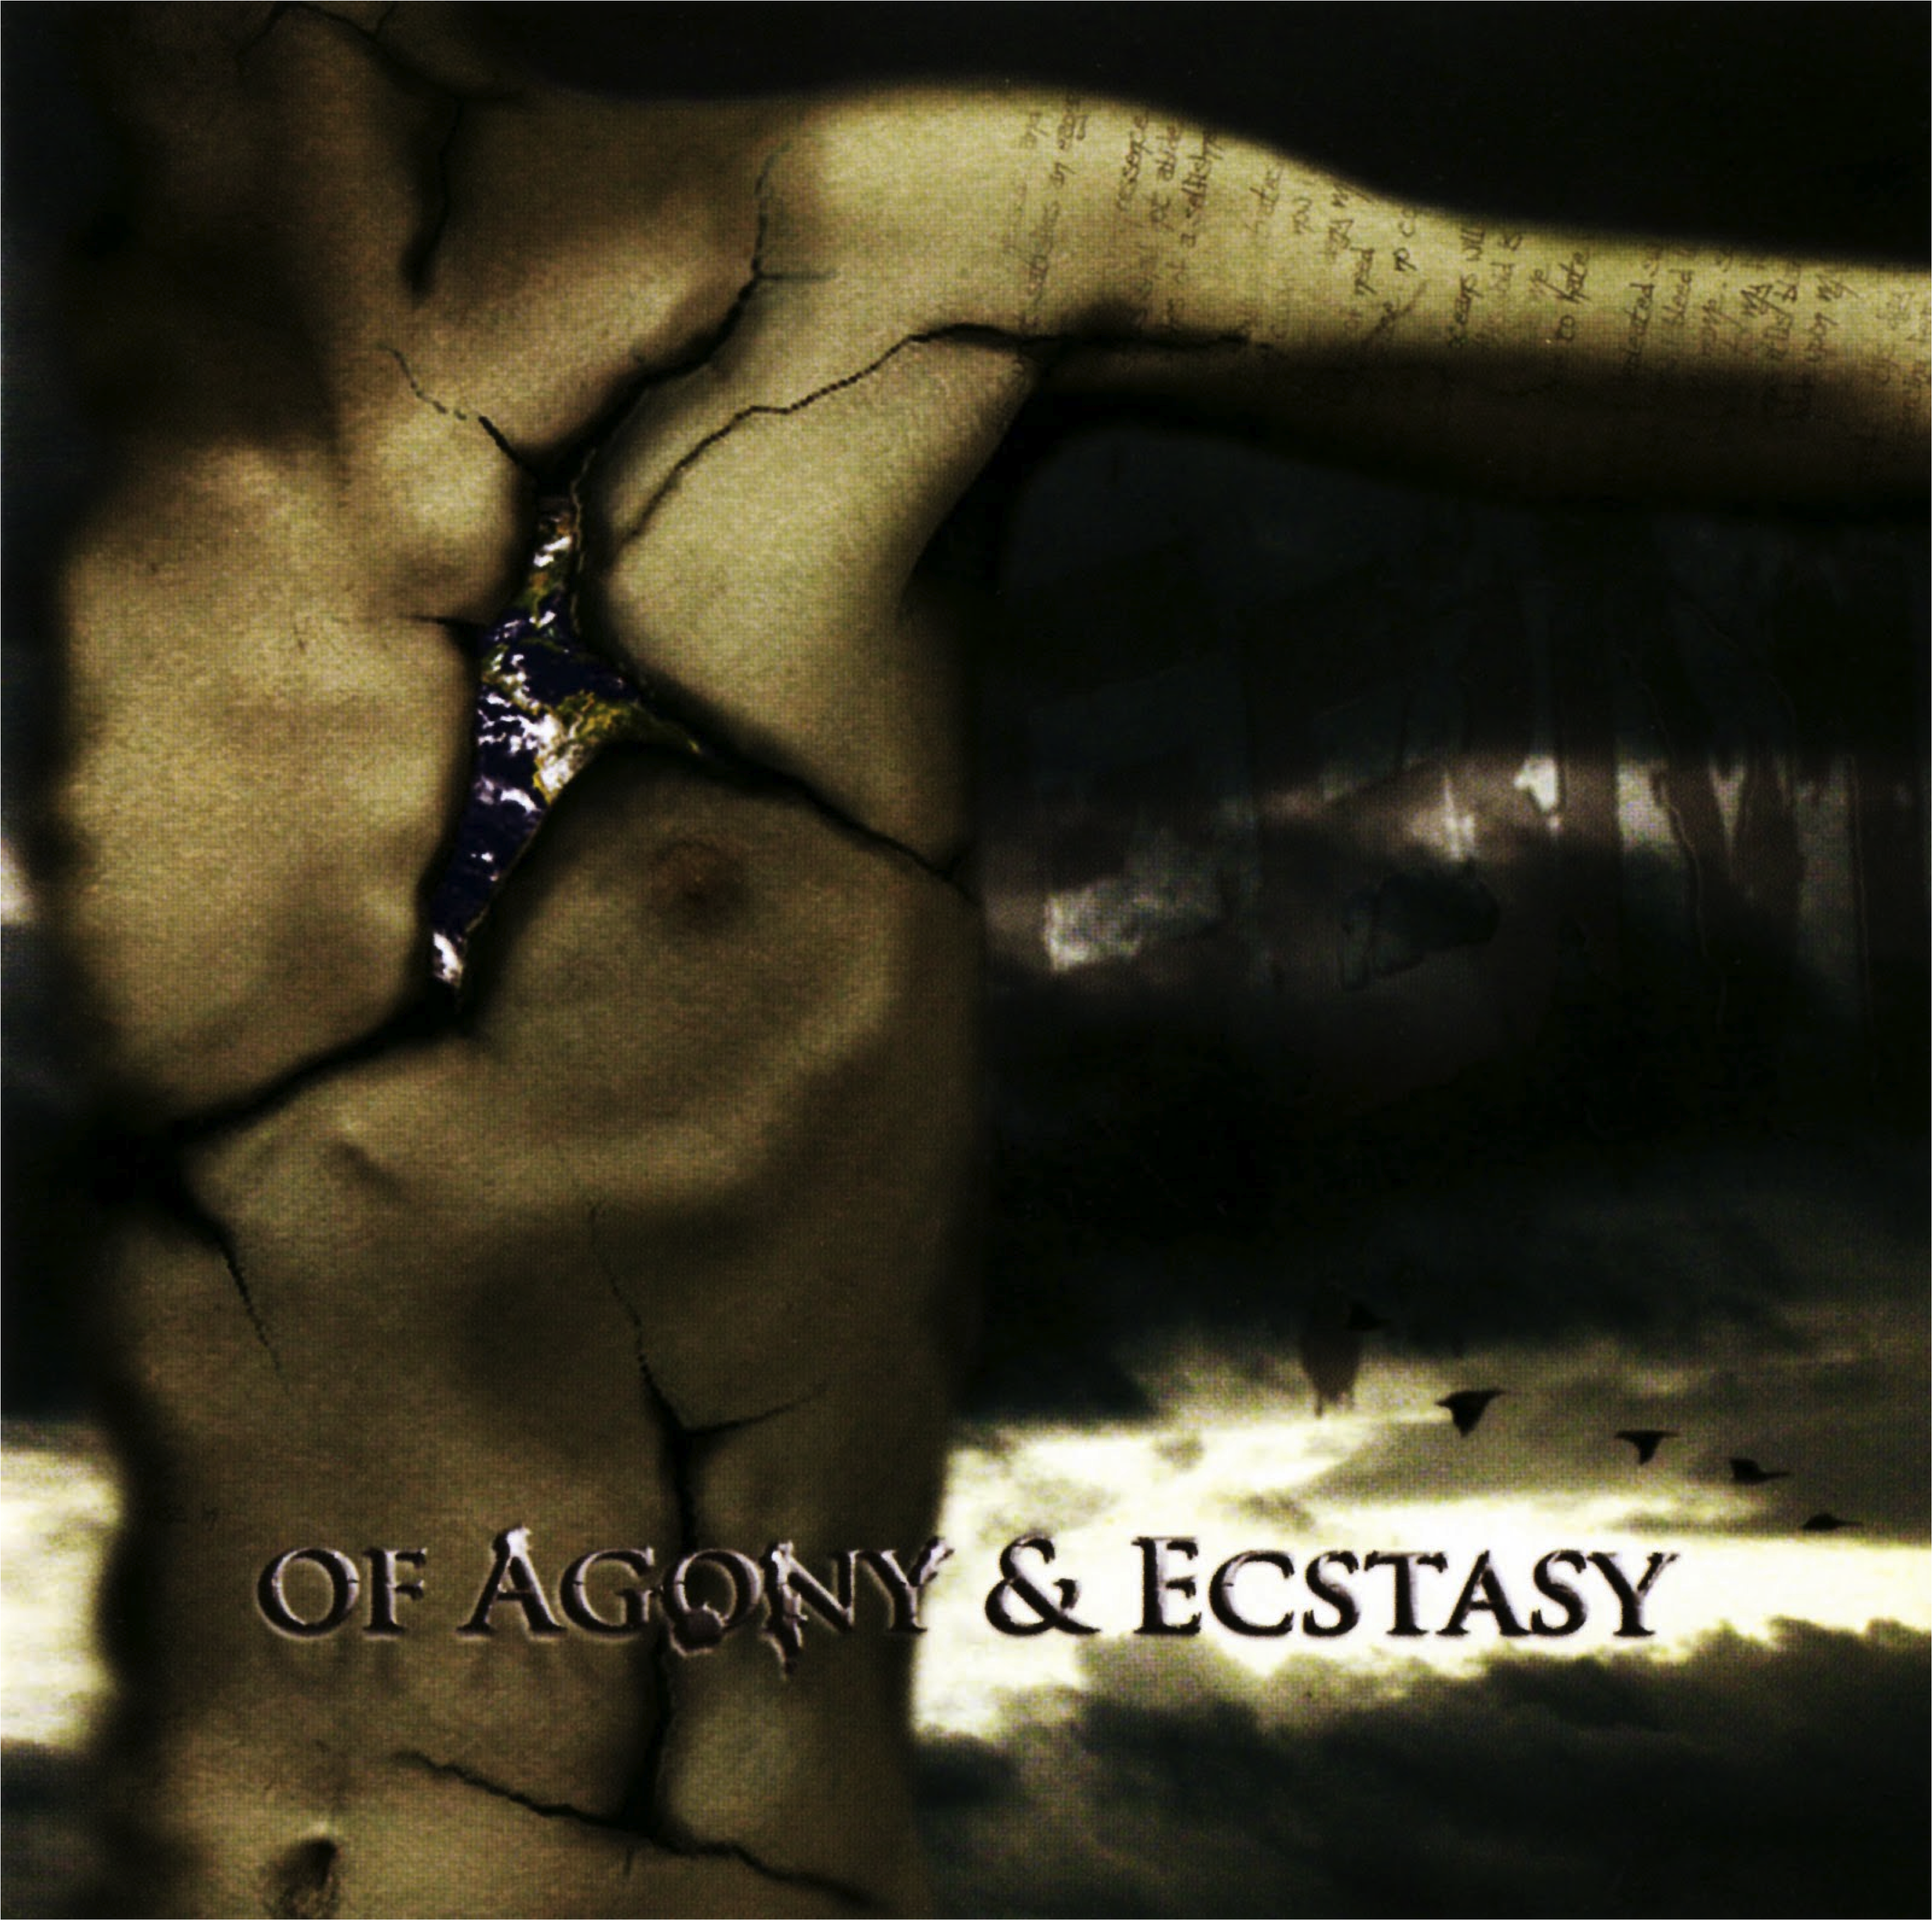 Pochette de l'album "Malice Of Agony & Ecstasy" du groupe Ennui Breathes 